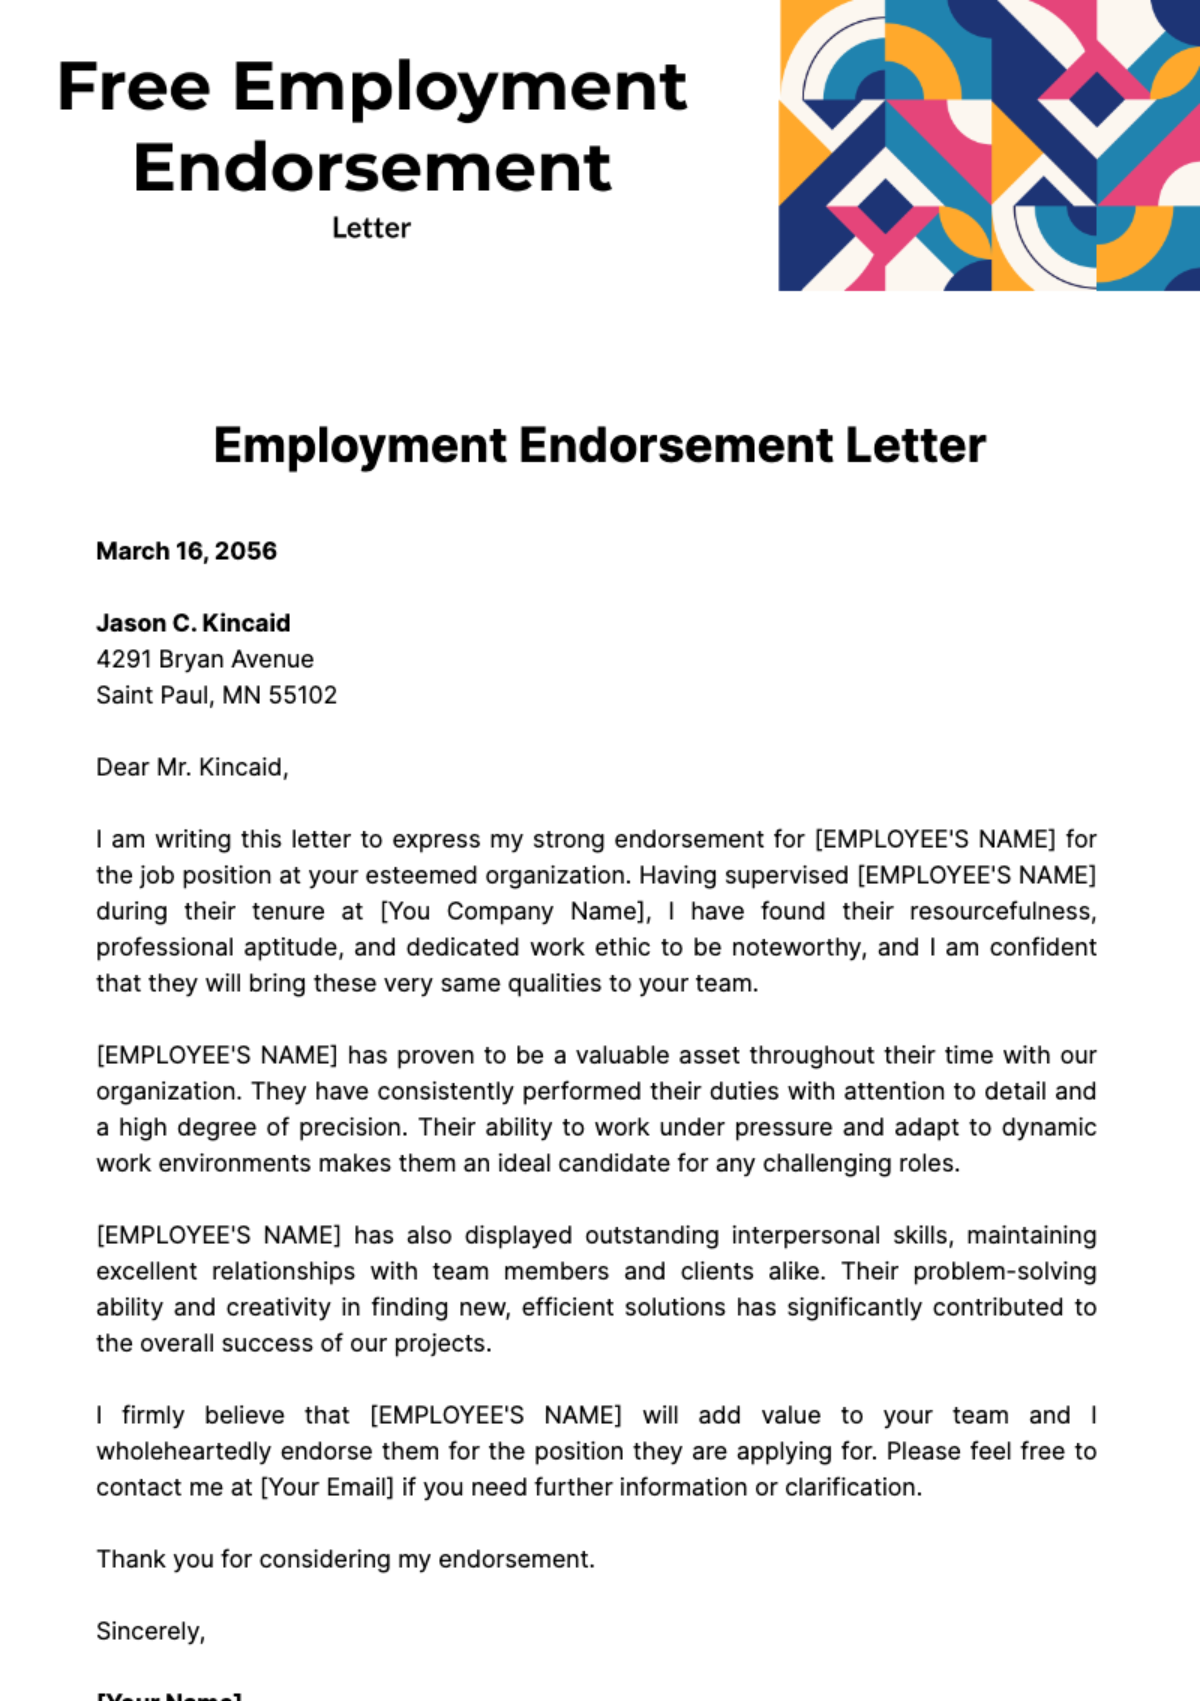 Employment Endorsement Letter Template